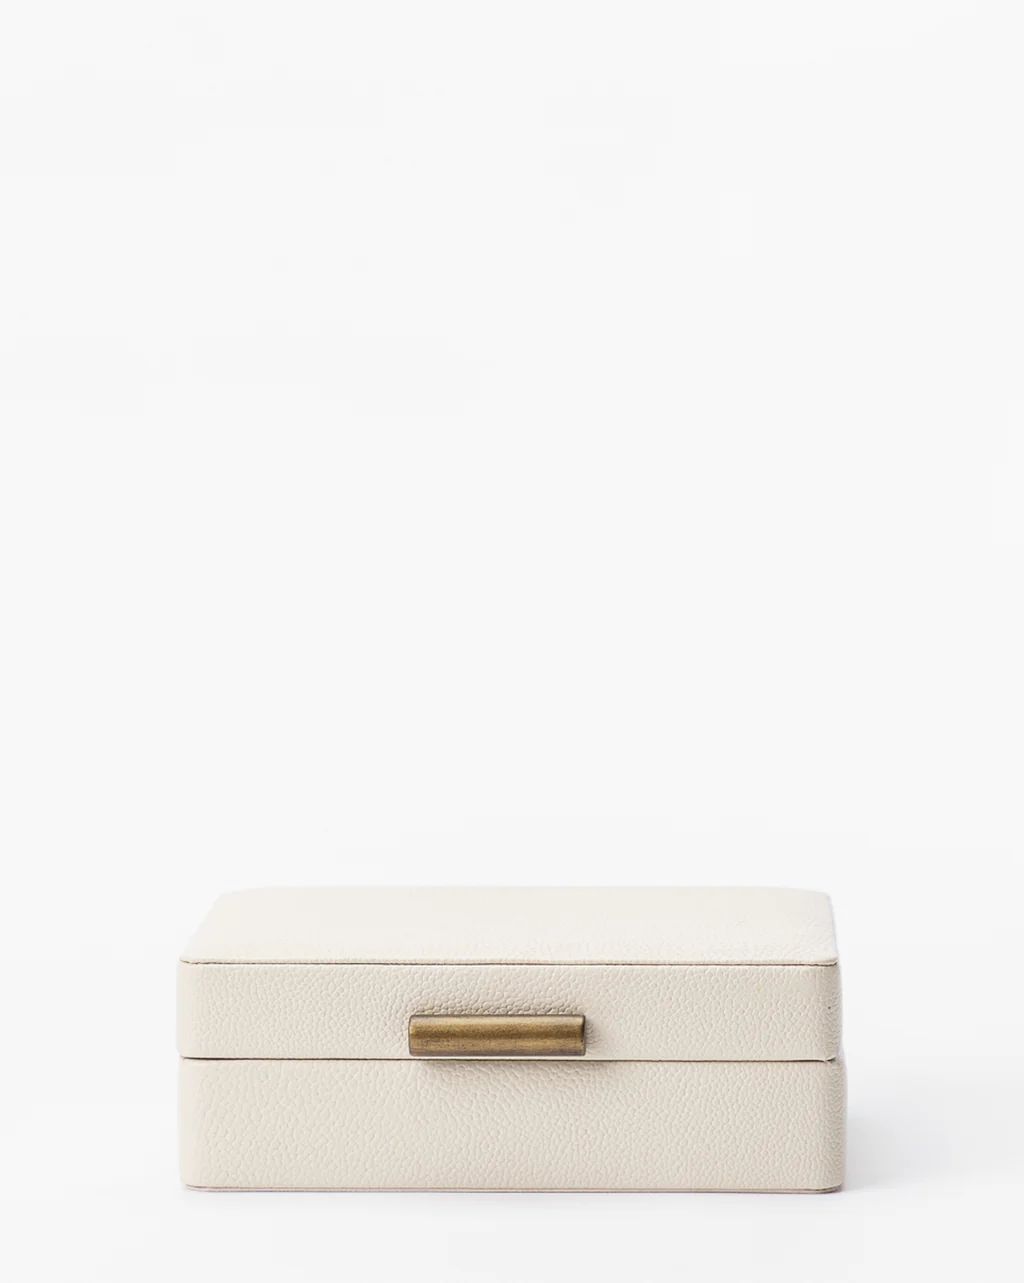 Coming Soon: White Shagreen Box | McGee & Co.